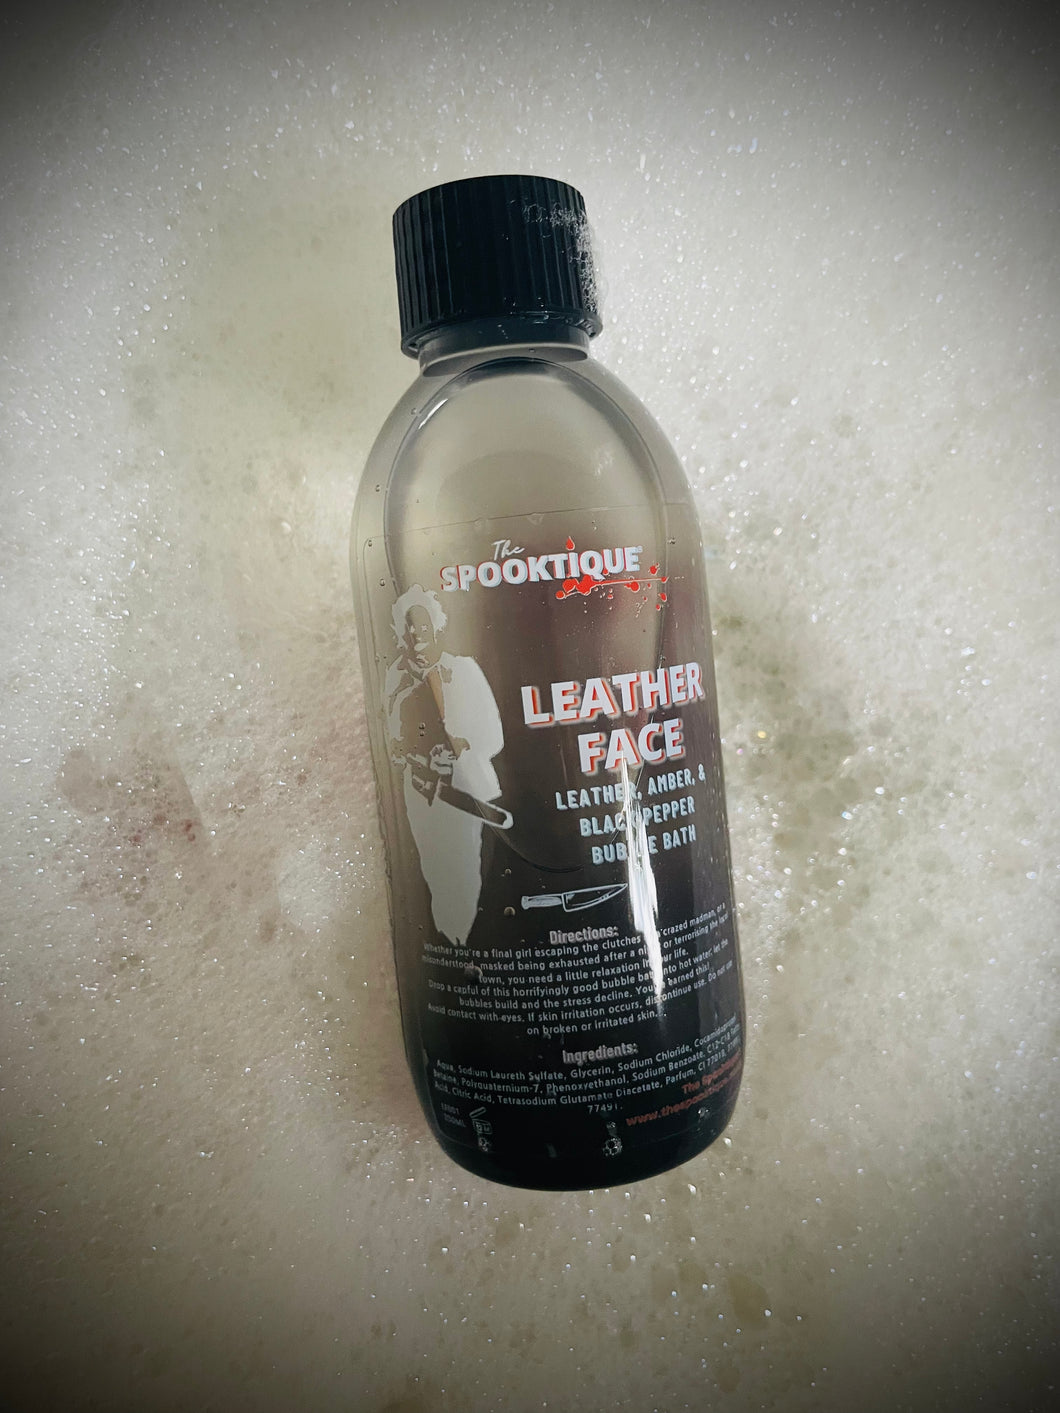 Leatherface Bubble Bath - Leather, Amber, & Black Pepper